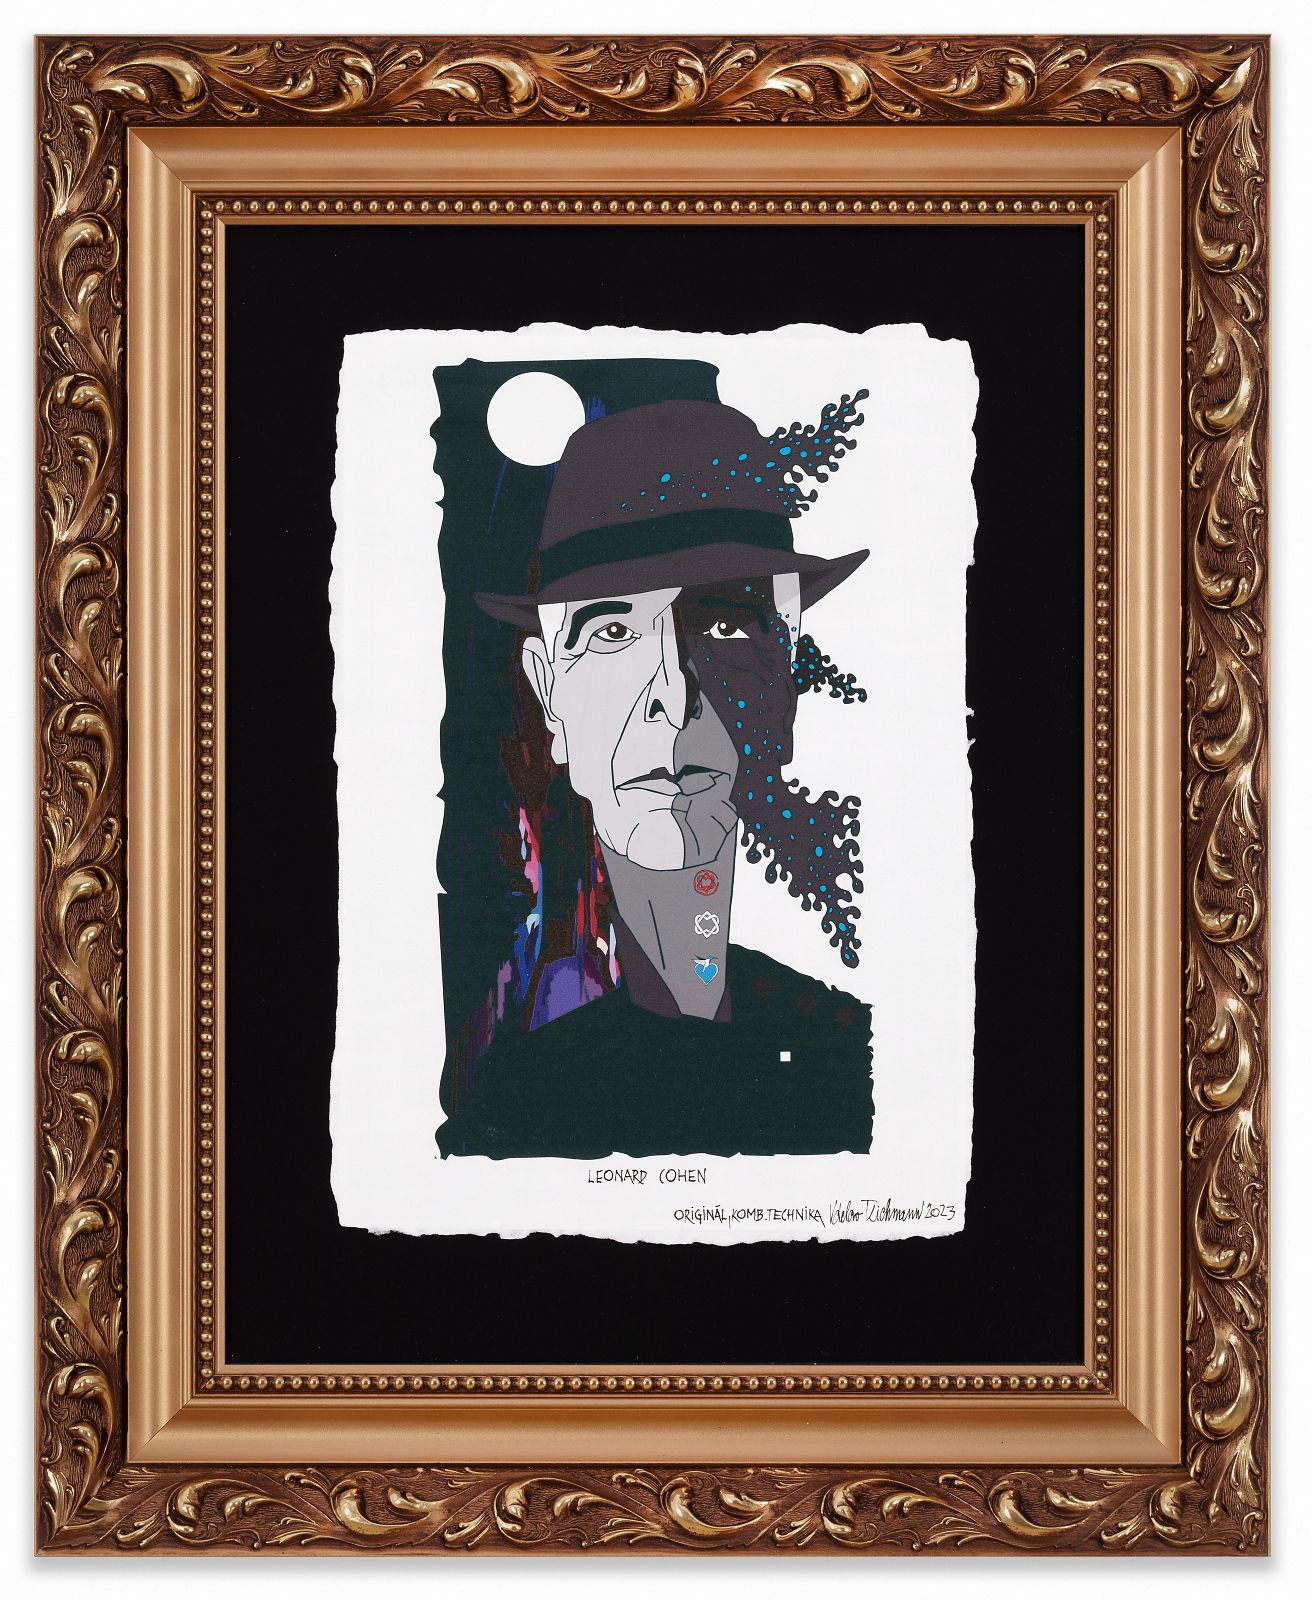 Teichmann Václav - Leonard Cohen